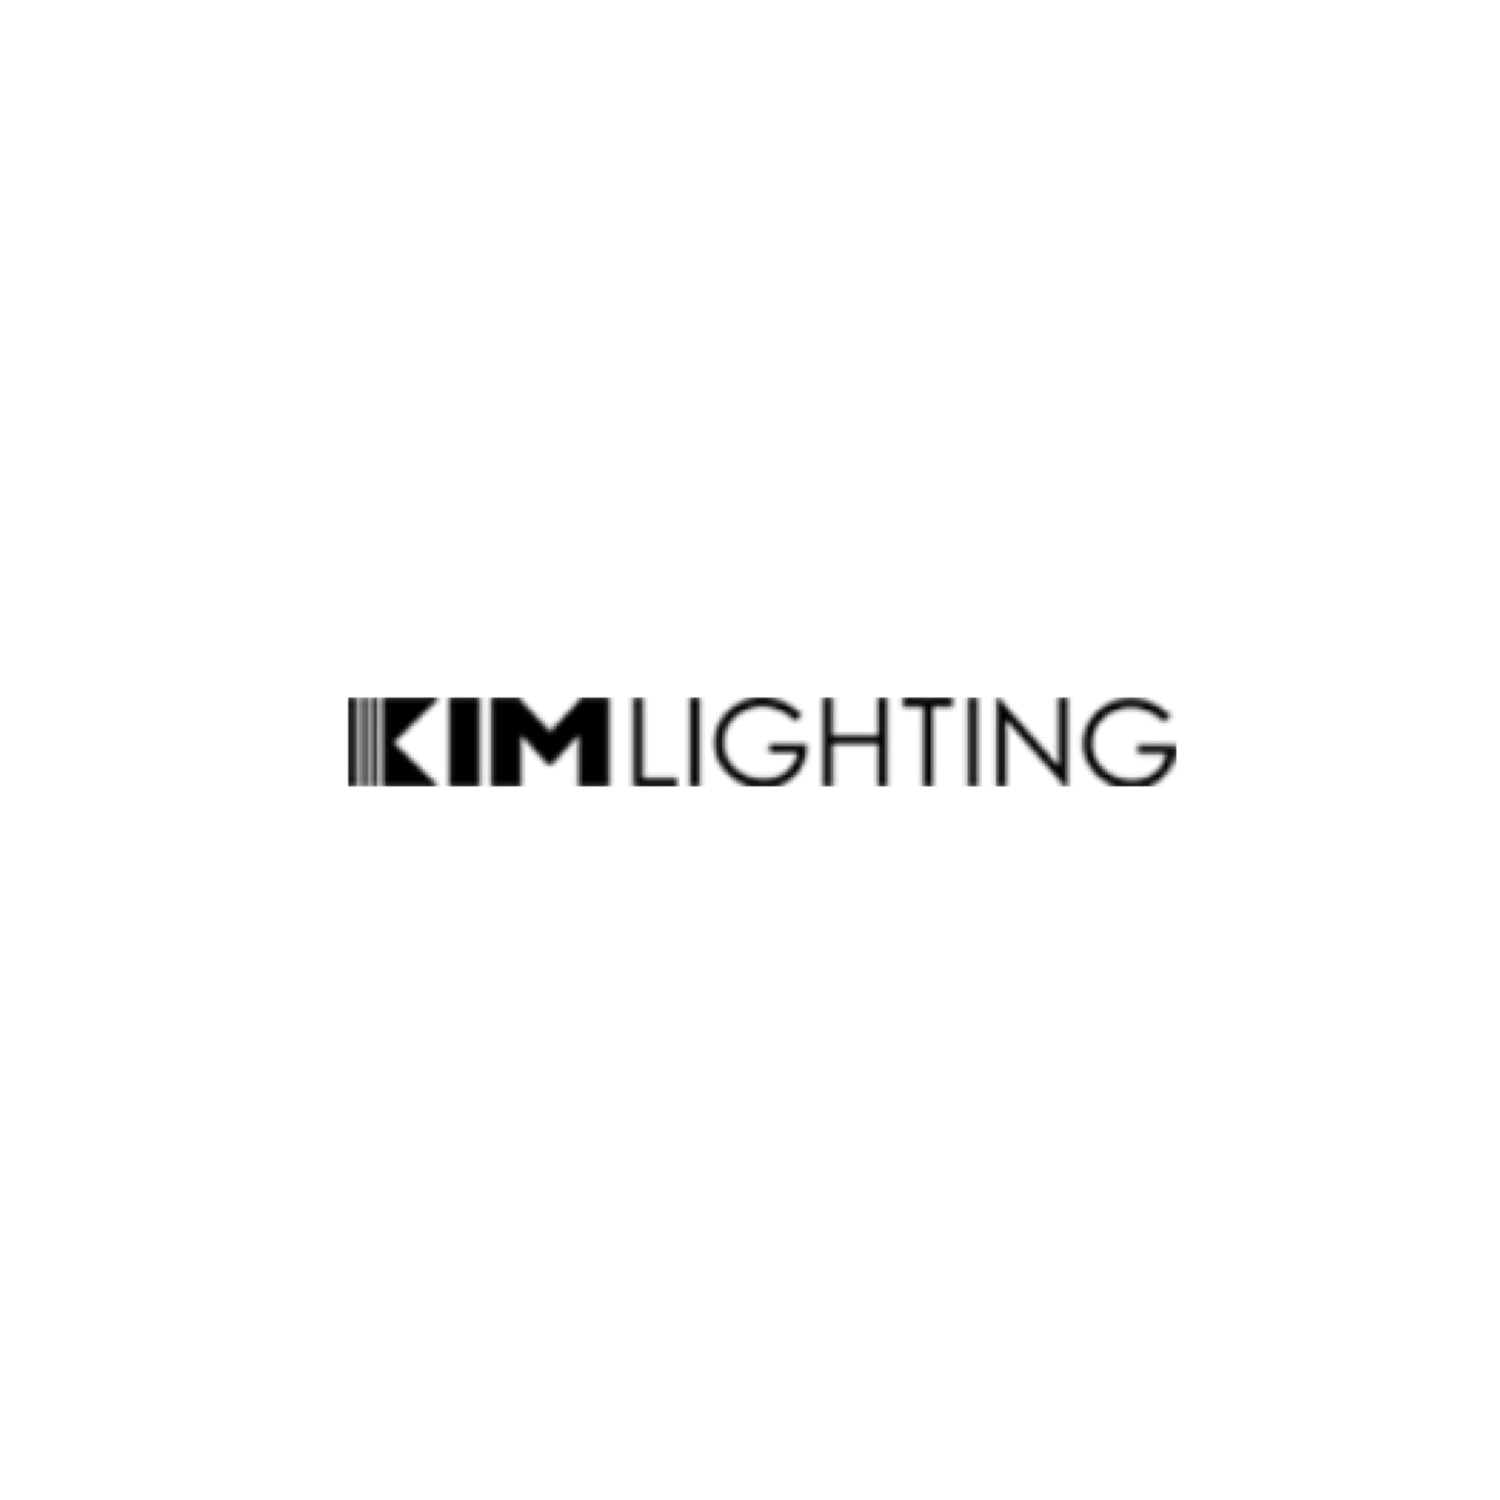 KIM LIGHTING